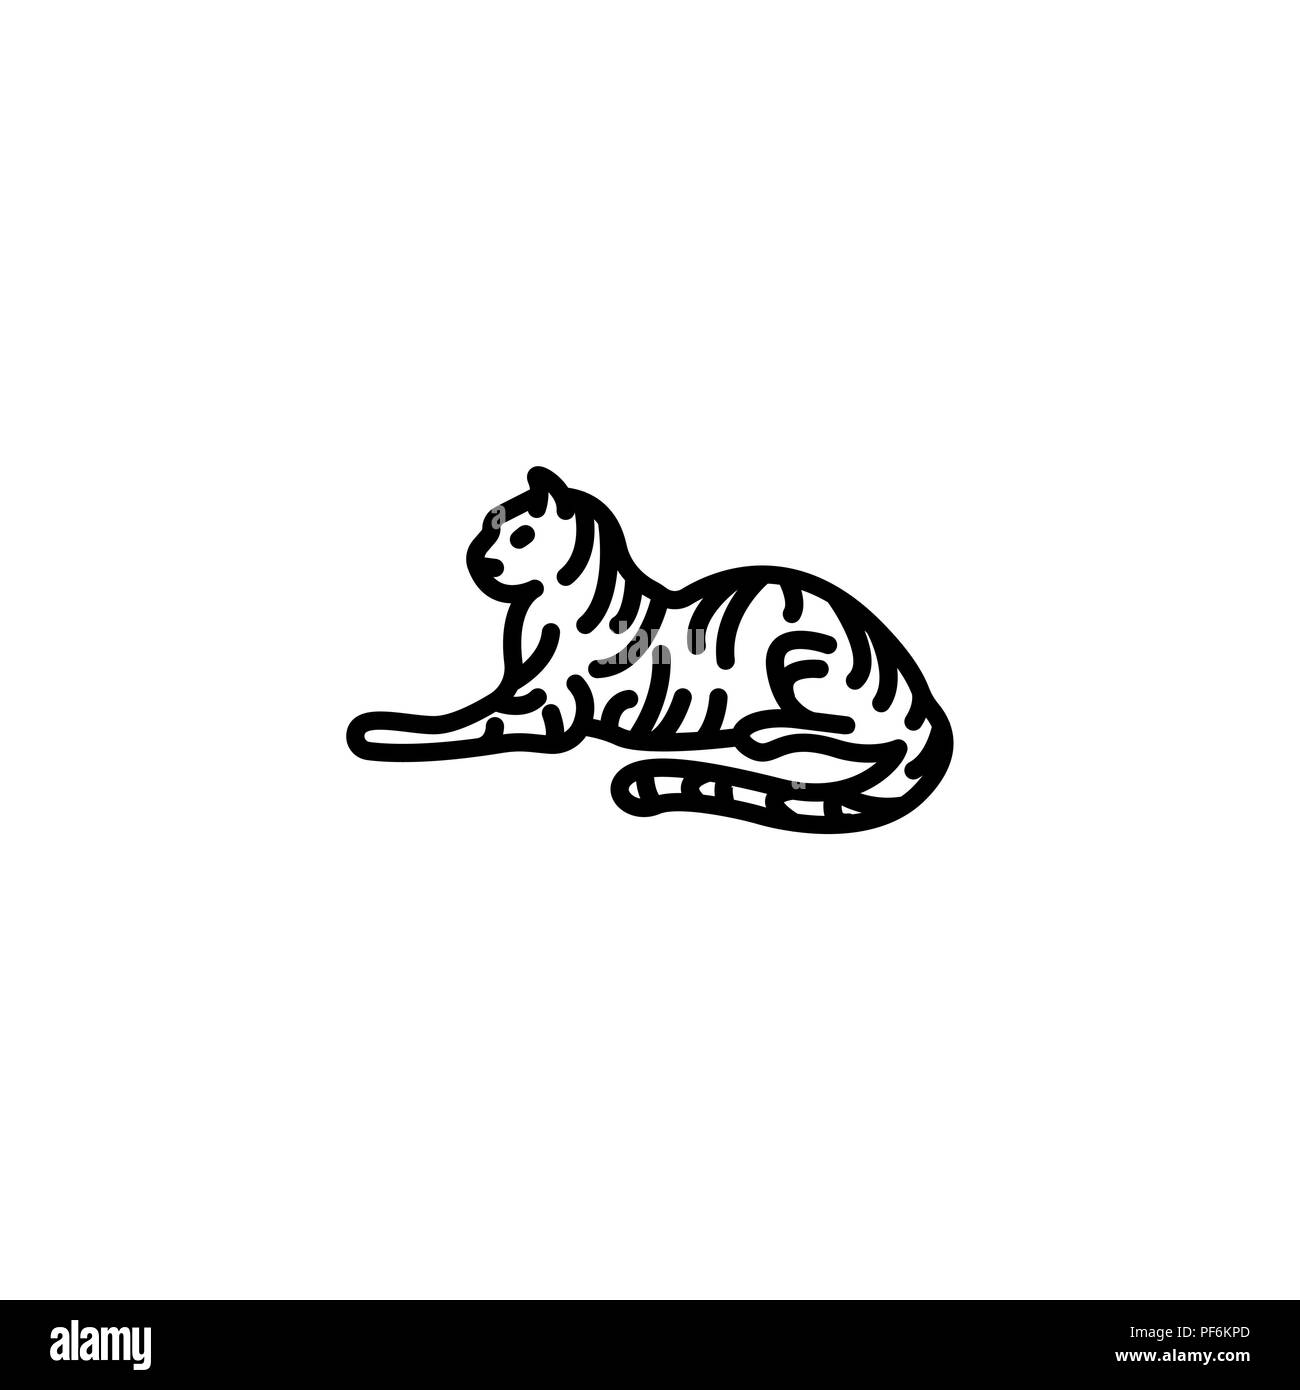 Web line icon. Tiger; wild animals black on white background Stock Vector